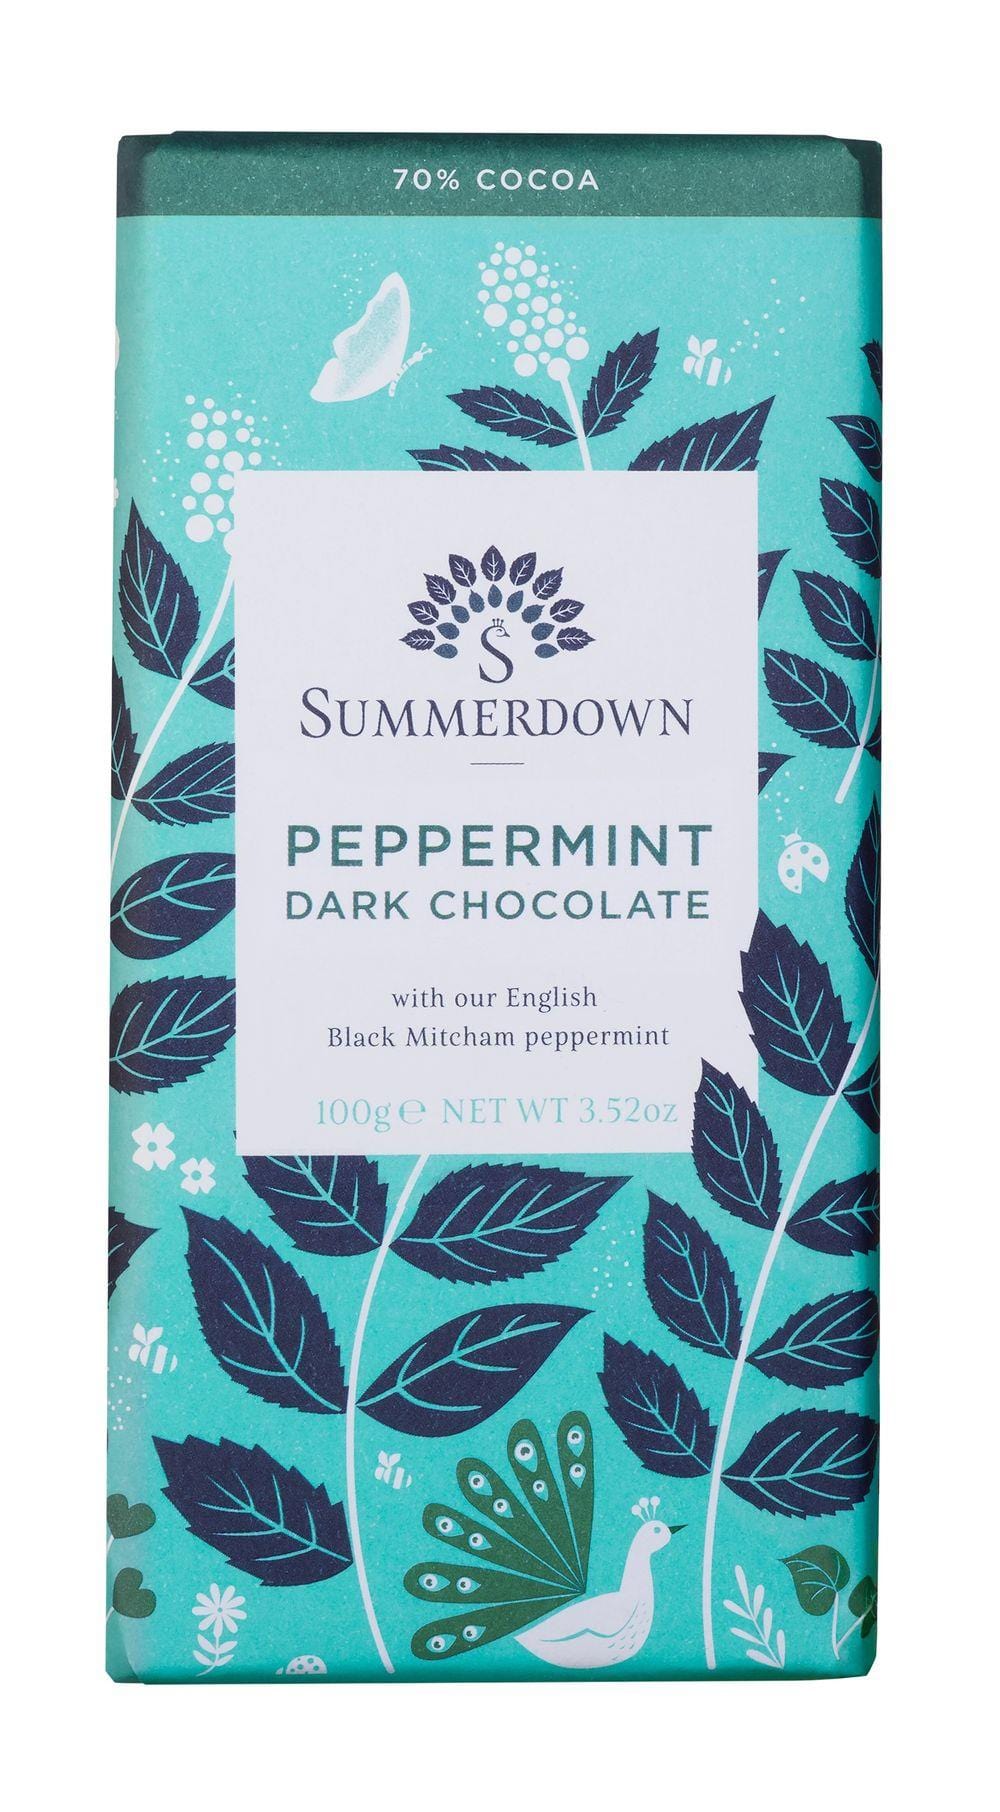 Chocolate Dark Peppermint Bar 100g
Summerdown